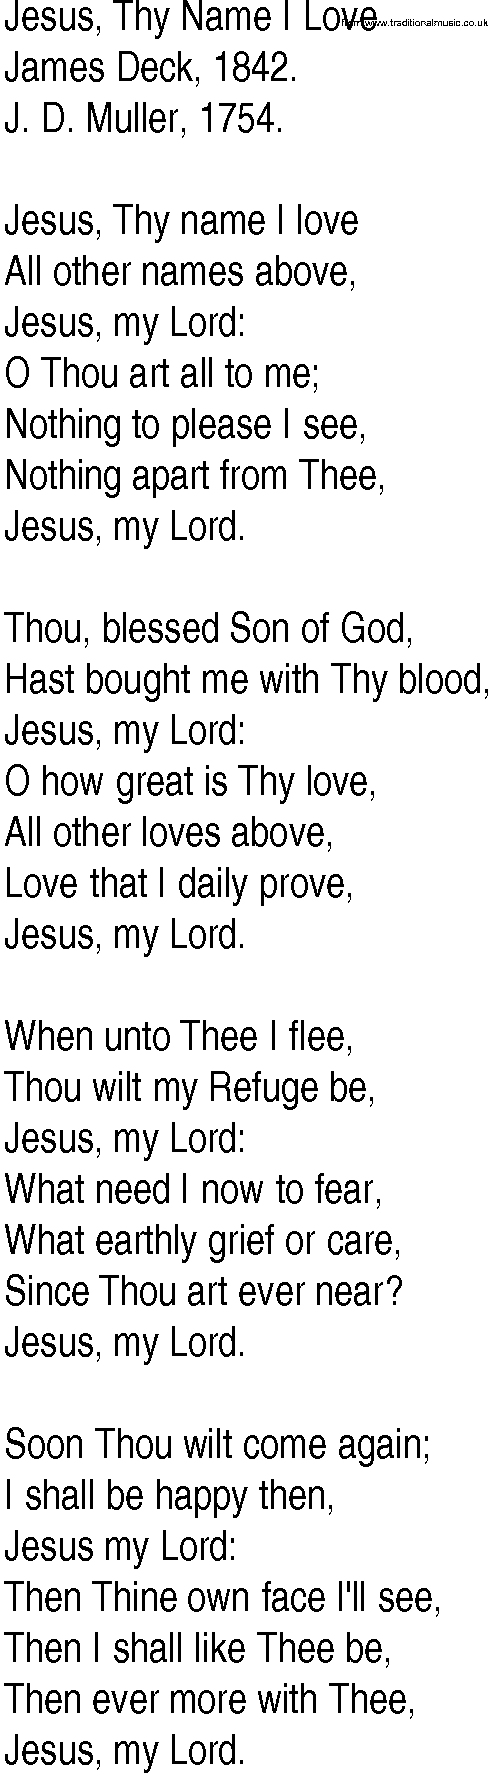 Hymn and Gospel Song: Jesus, Thy Name I Love by James Deck lyrics